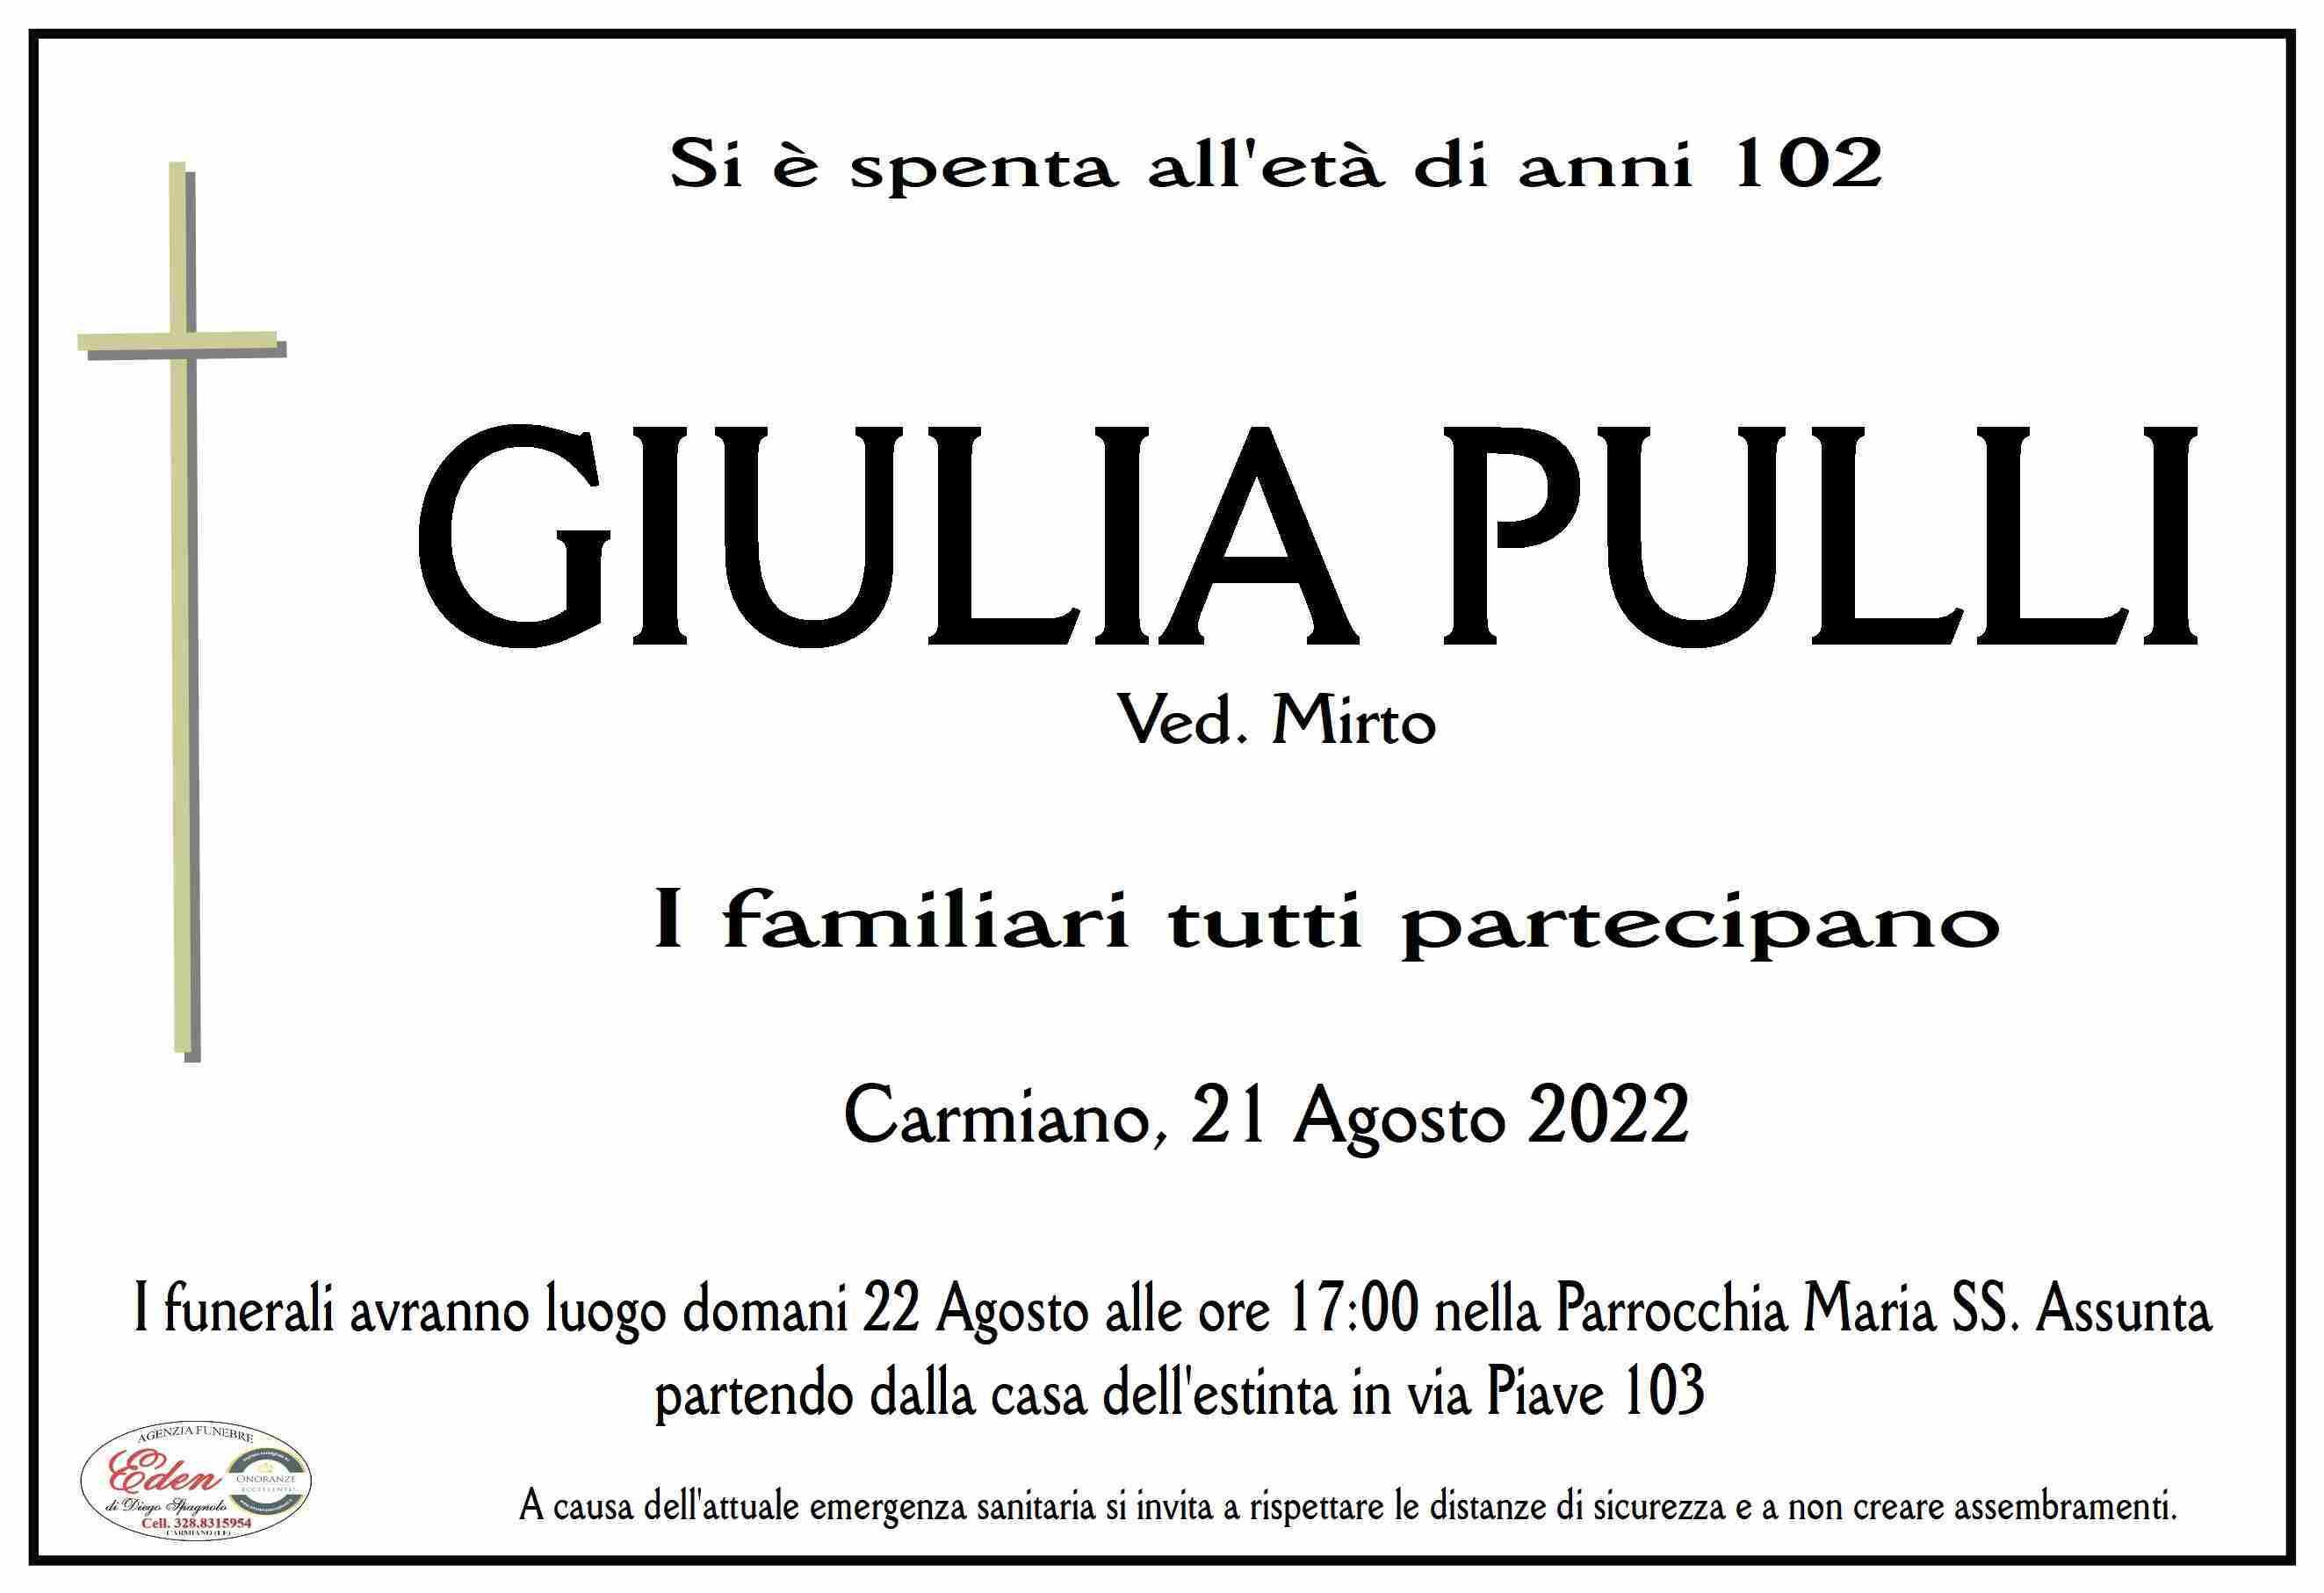 Giulia Pulli